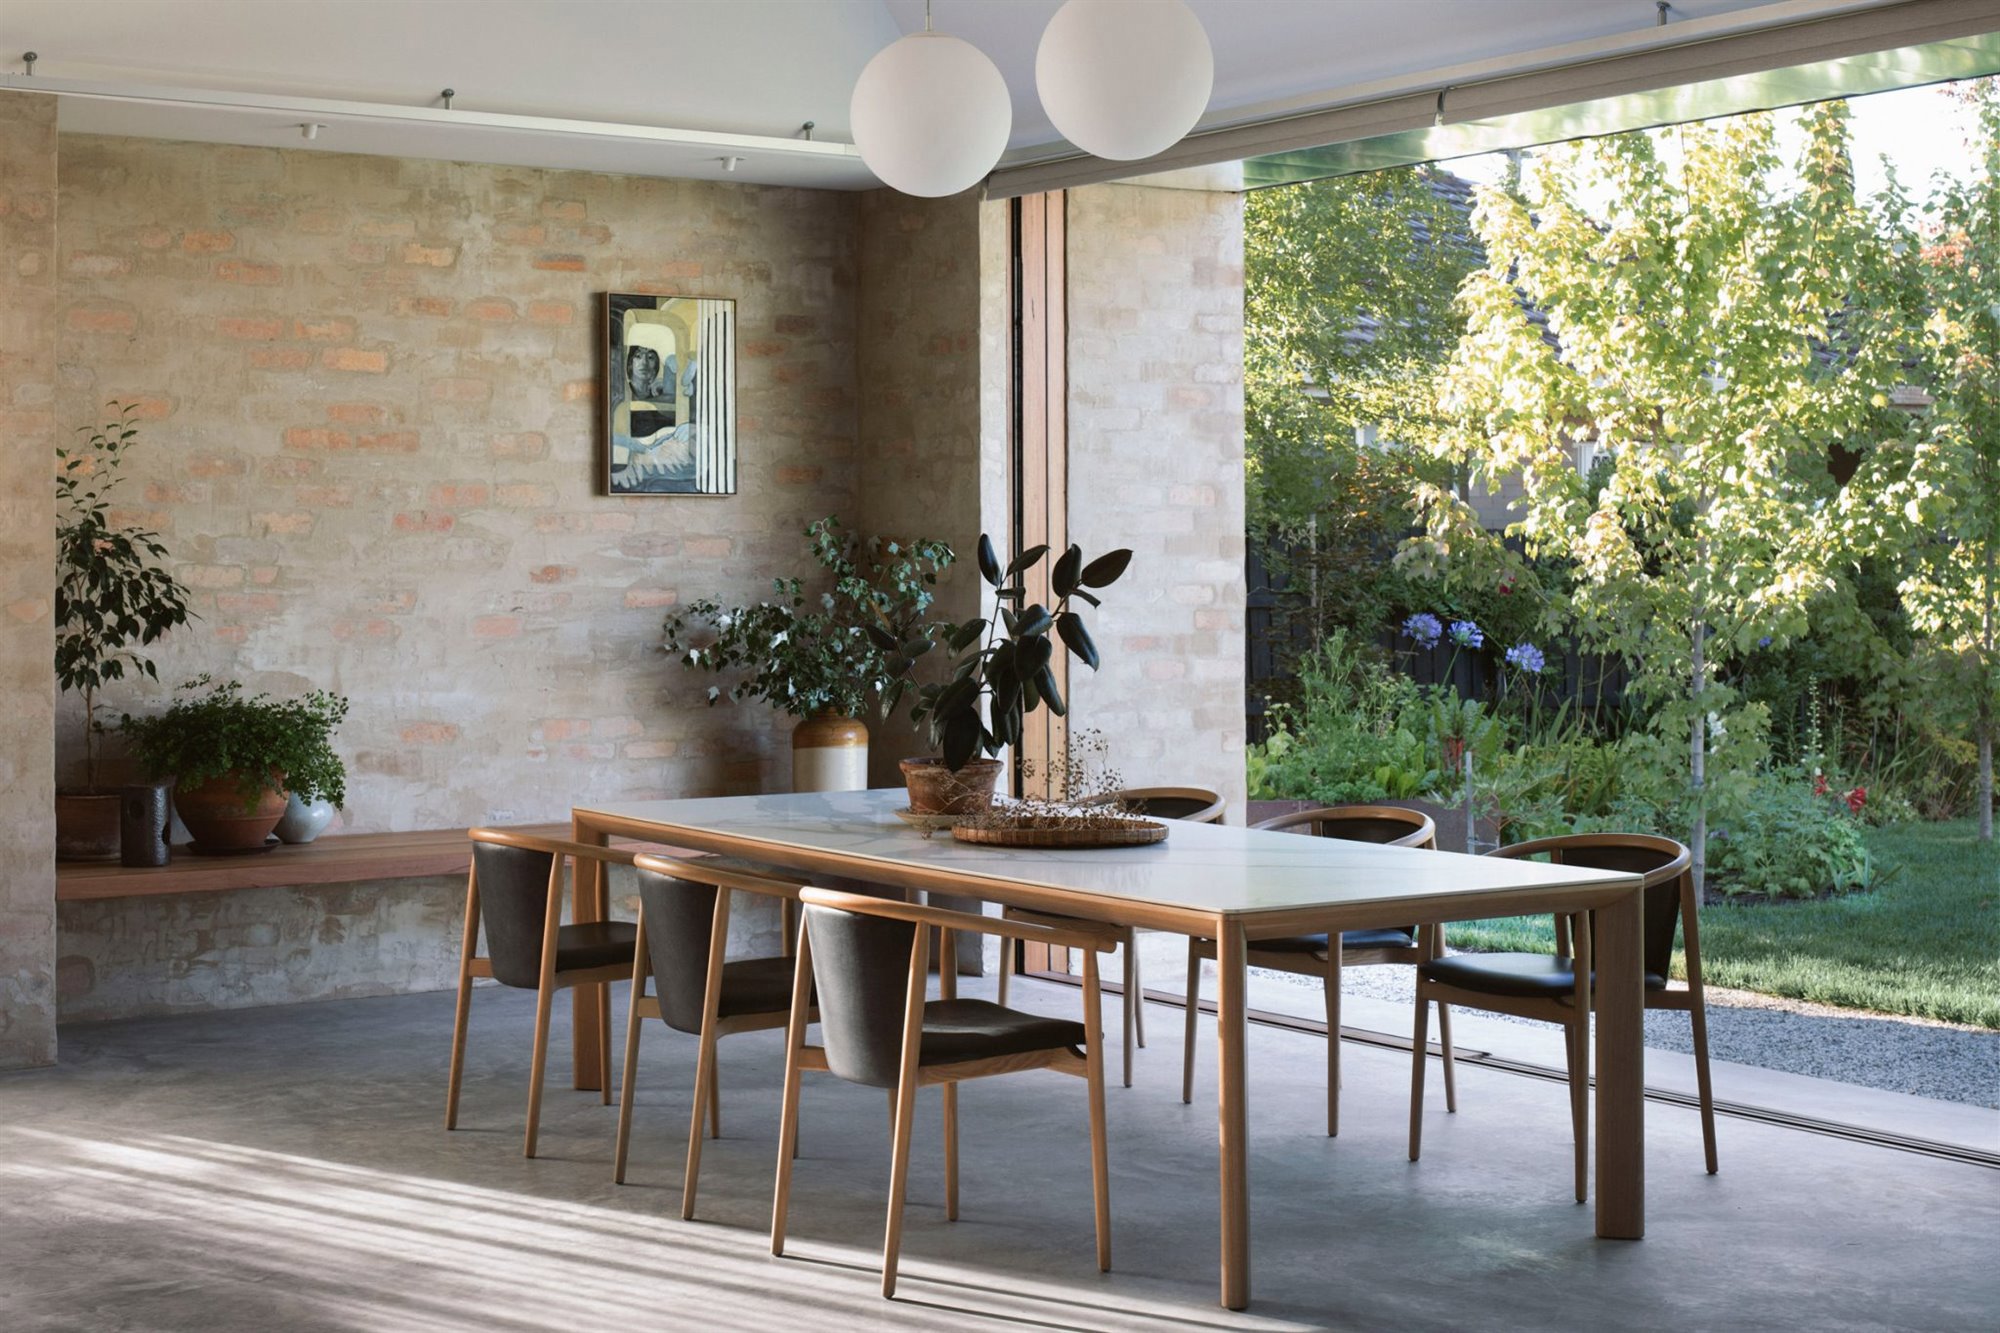 kyneton-house-edition-office-architecture-residential-australia dezeen 2364 col 11-2048x1365